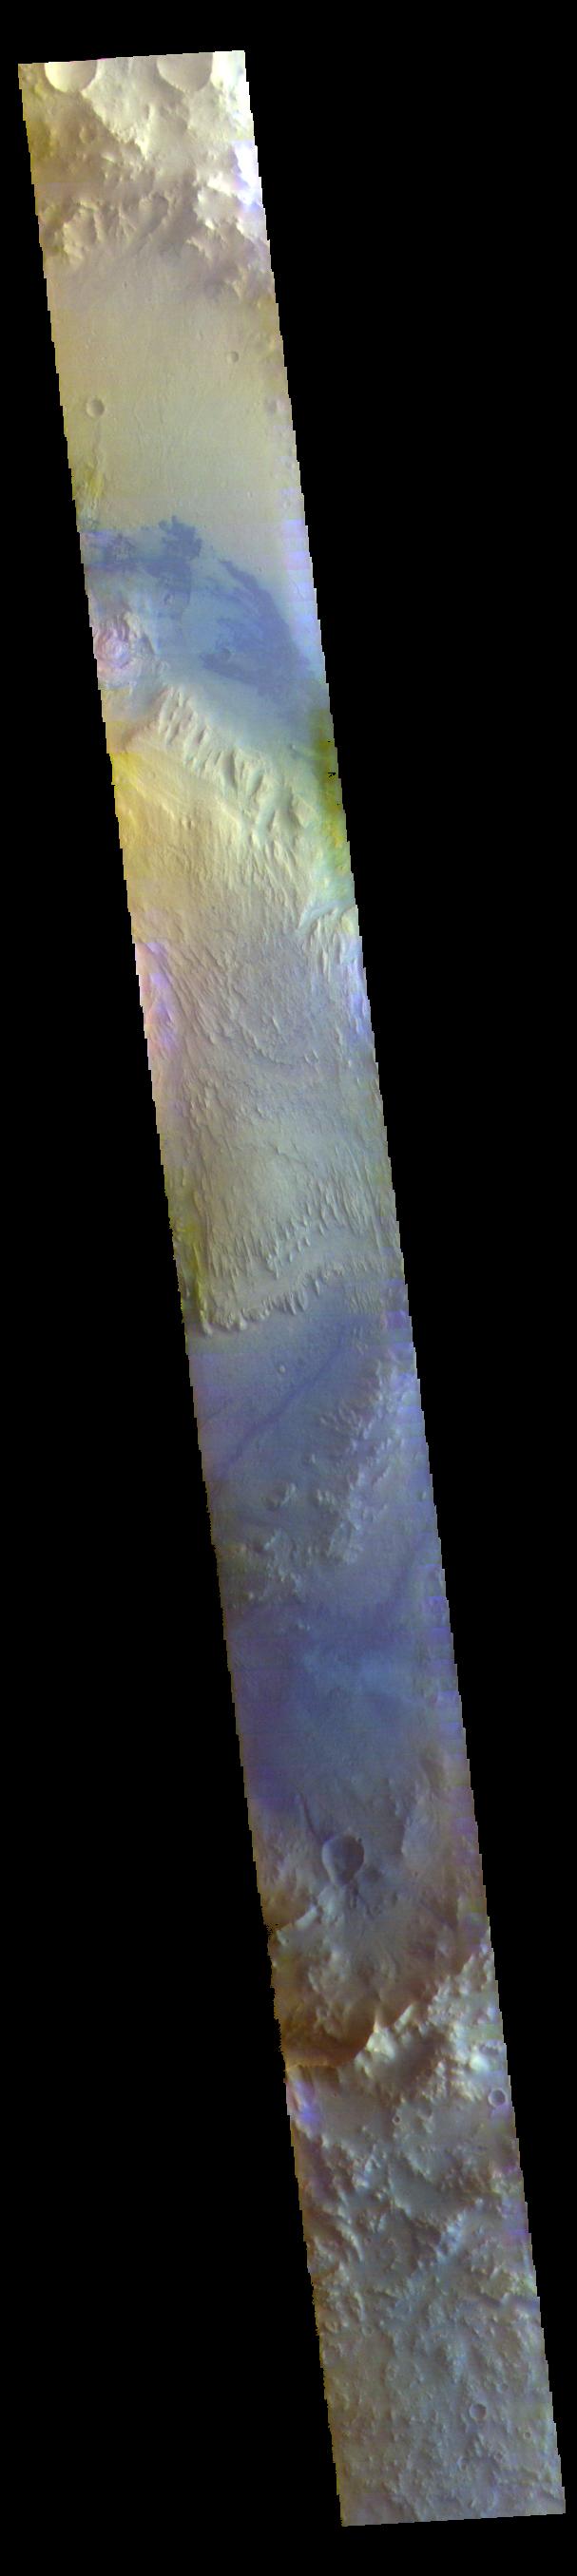 PIA24608: Gale Crater - False Color